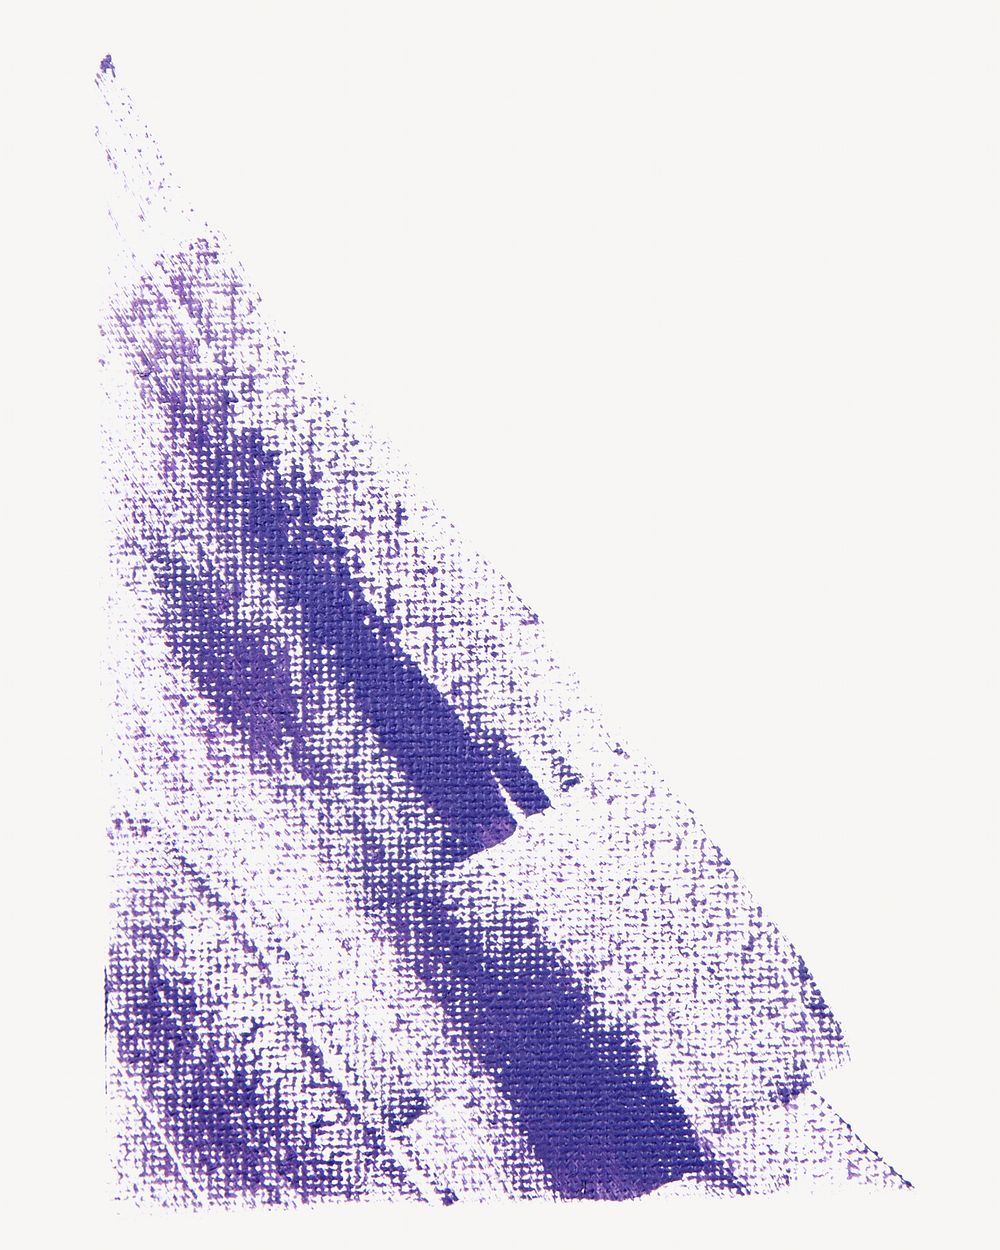 Purple brush stroke collage element